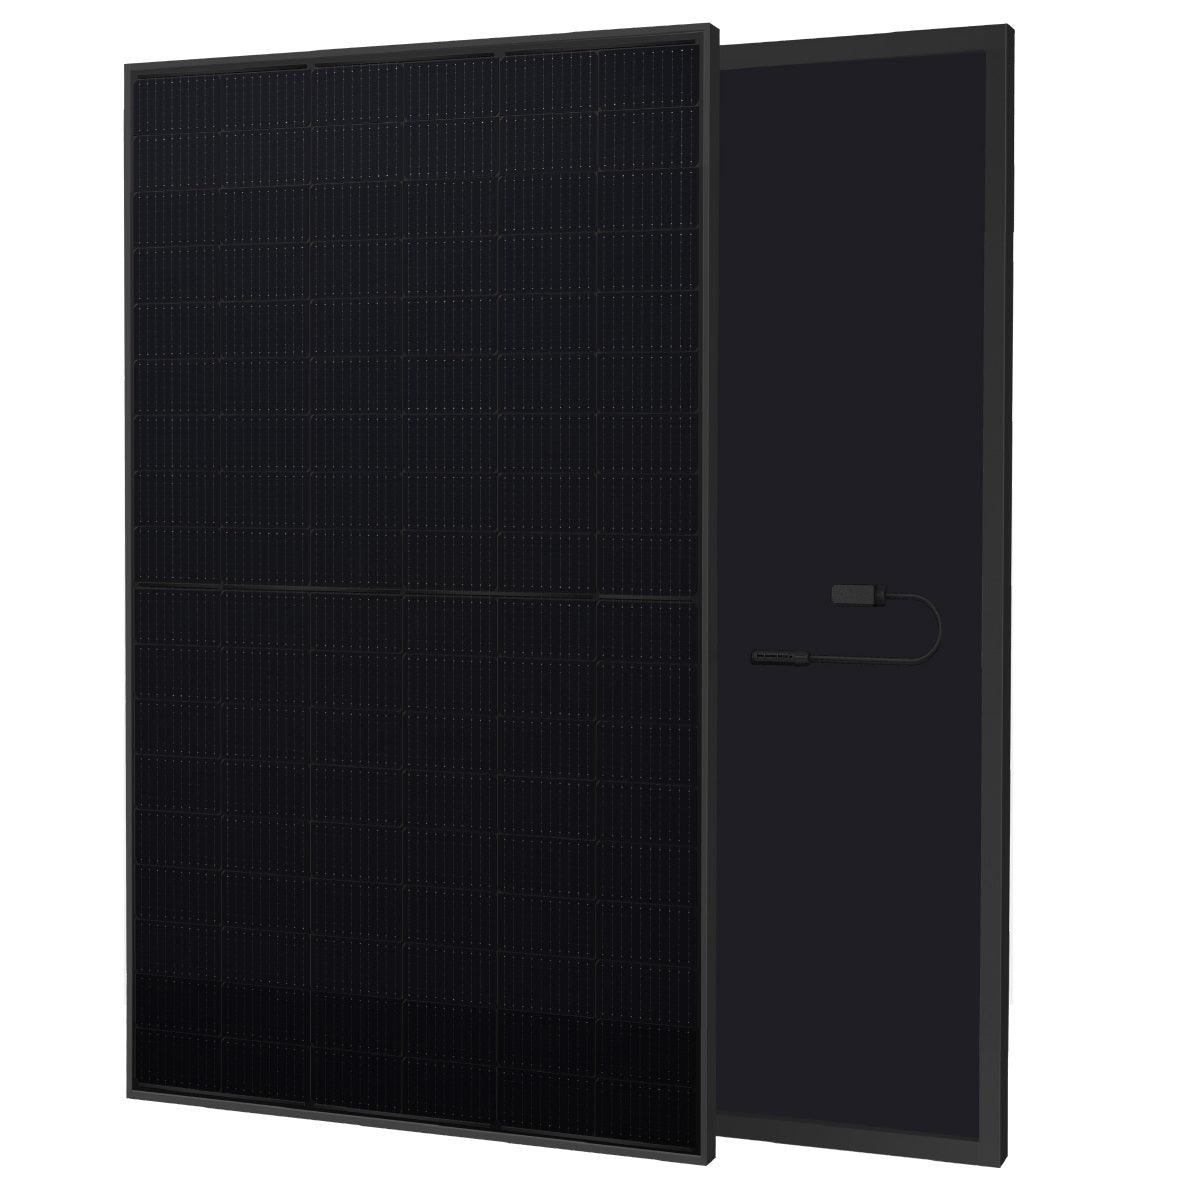 Renesola Solar Panel Bifacial Double Sided 425W front 90W Back Half Cut Monocrystalline - VoltaconSolar